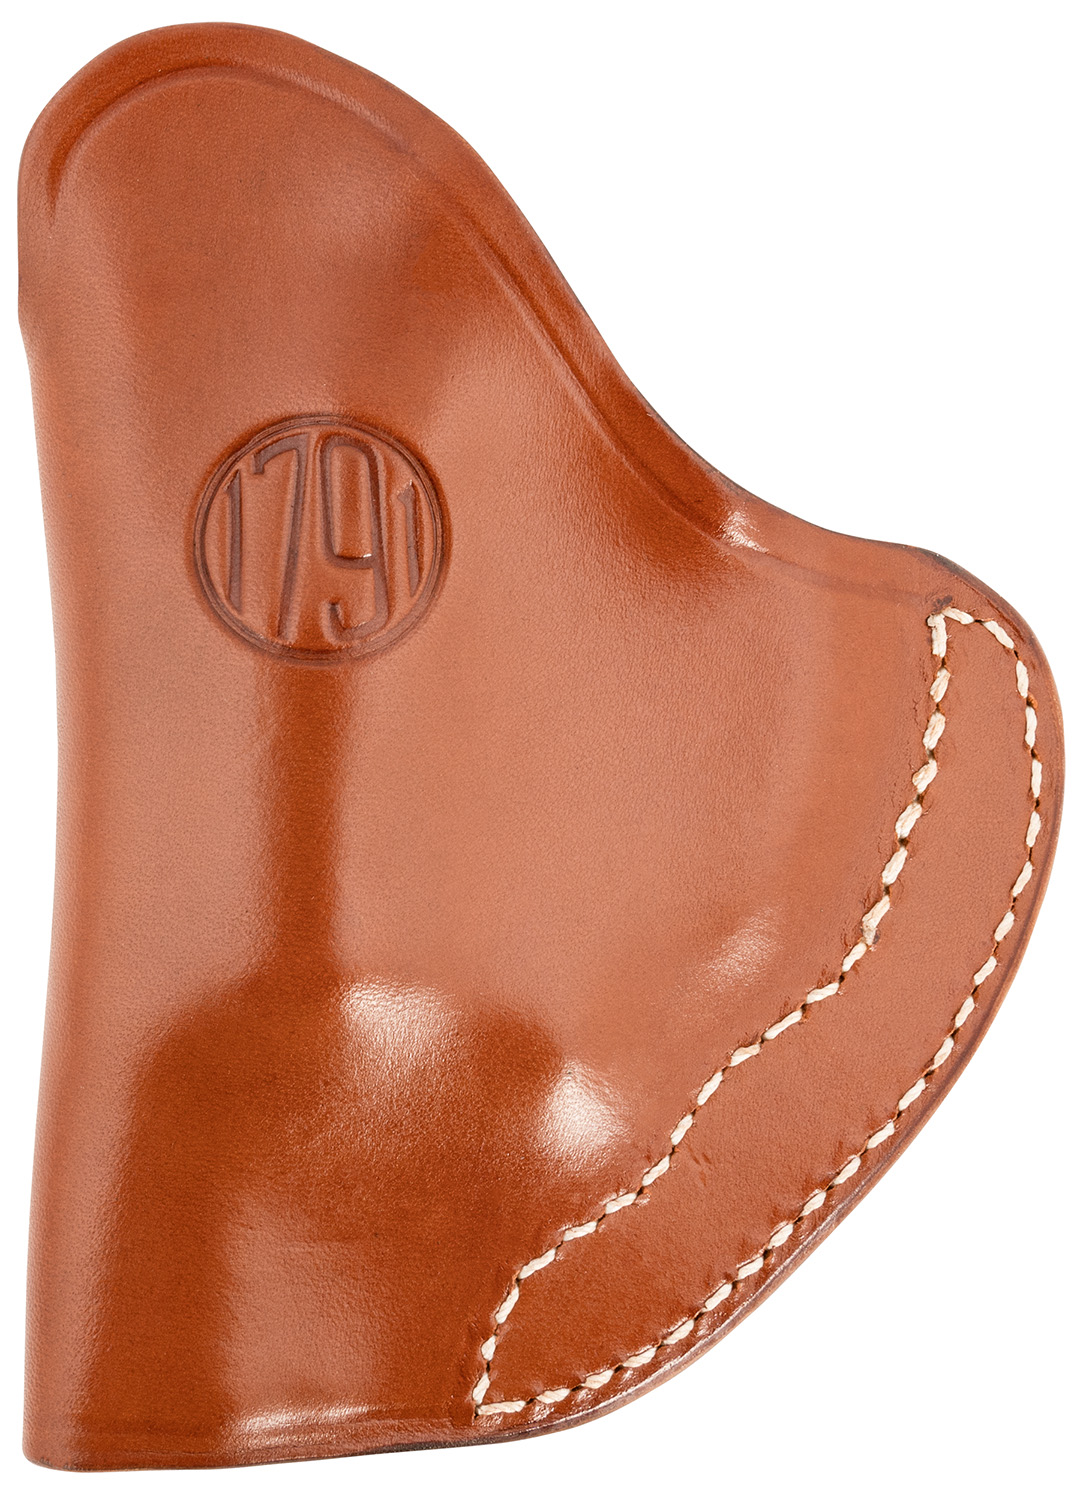 1791 Gunleather RVHIWB1CCBRR RVH IWB Size 01 Classic Brown Leather Belt...-img-0